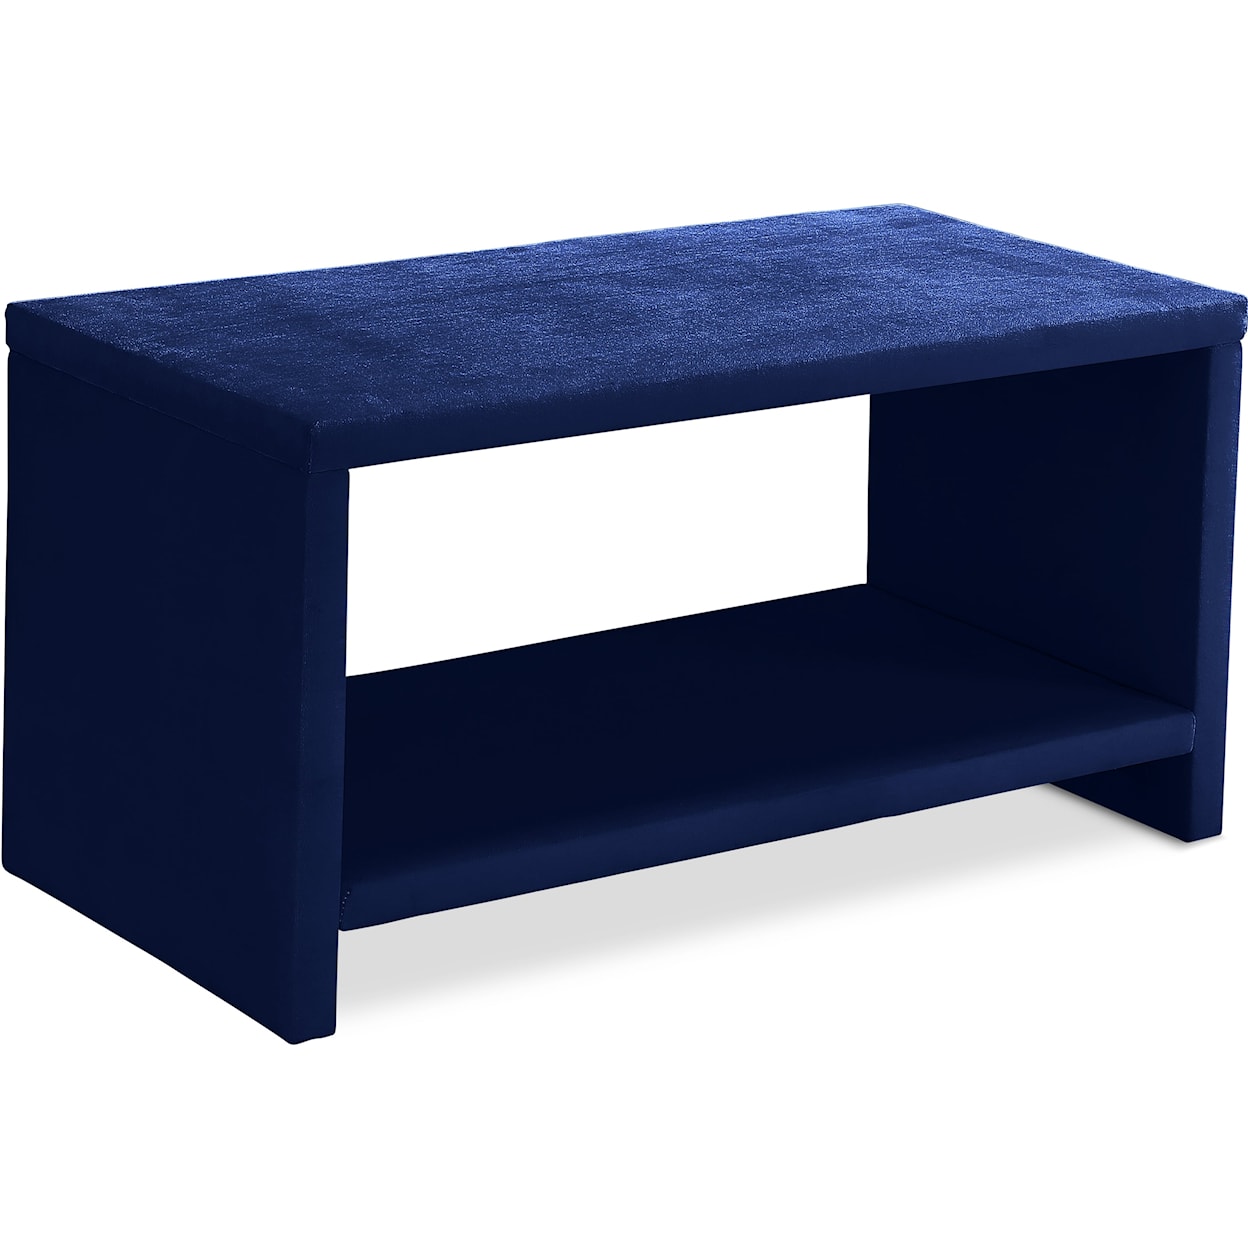 Meridian Furniture Cleo Upholstered Velvet Nightstand with Shelving